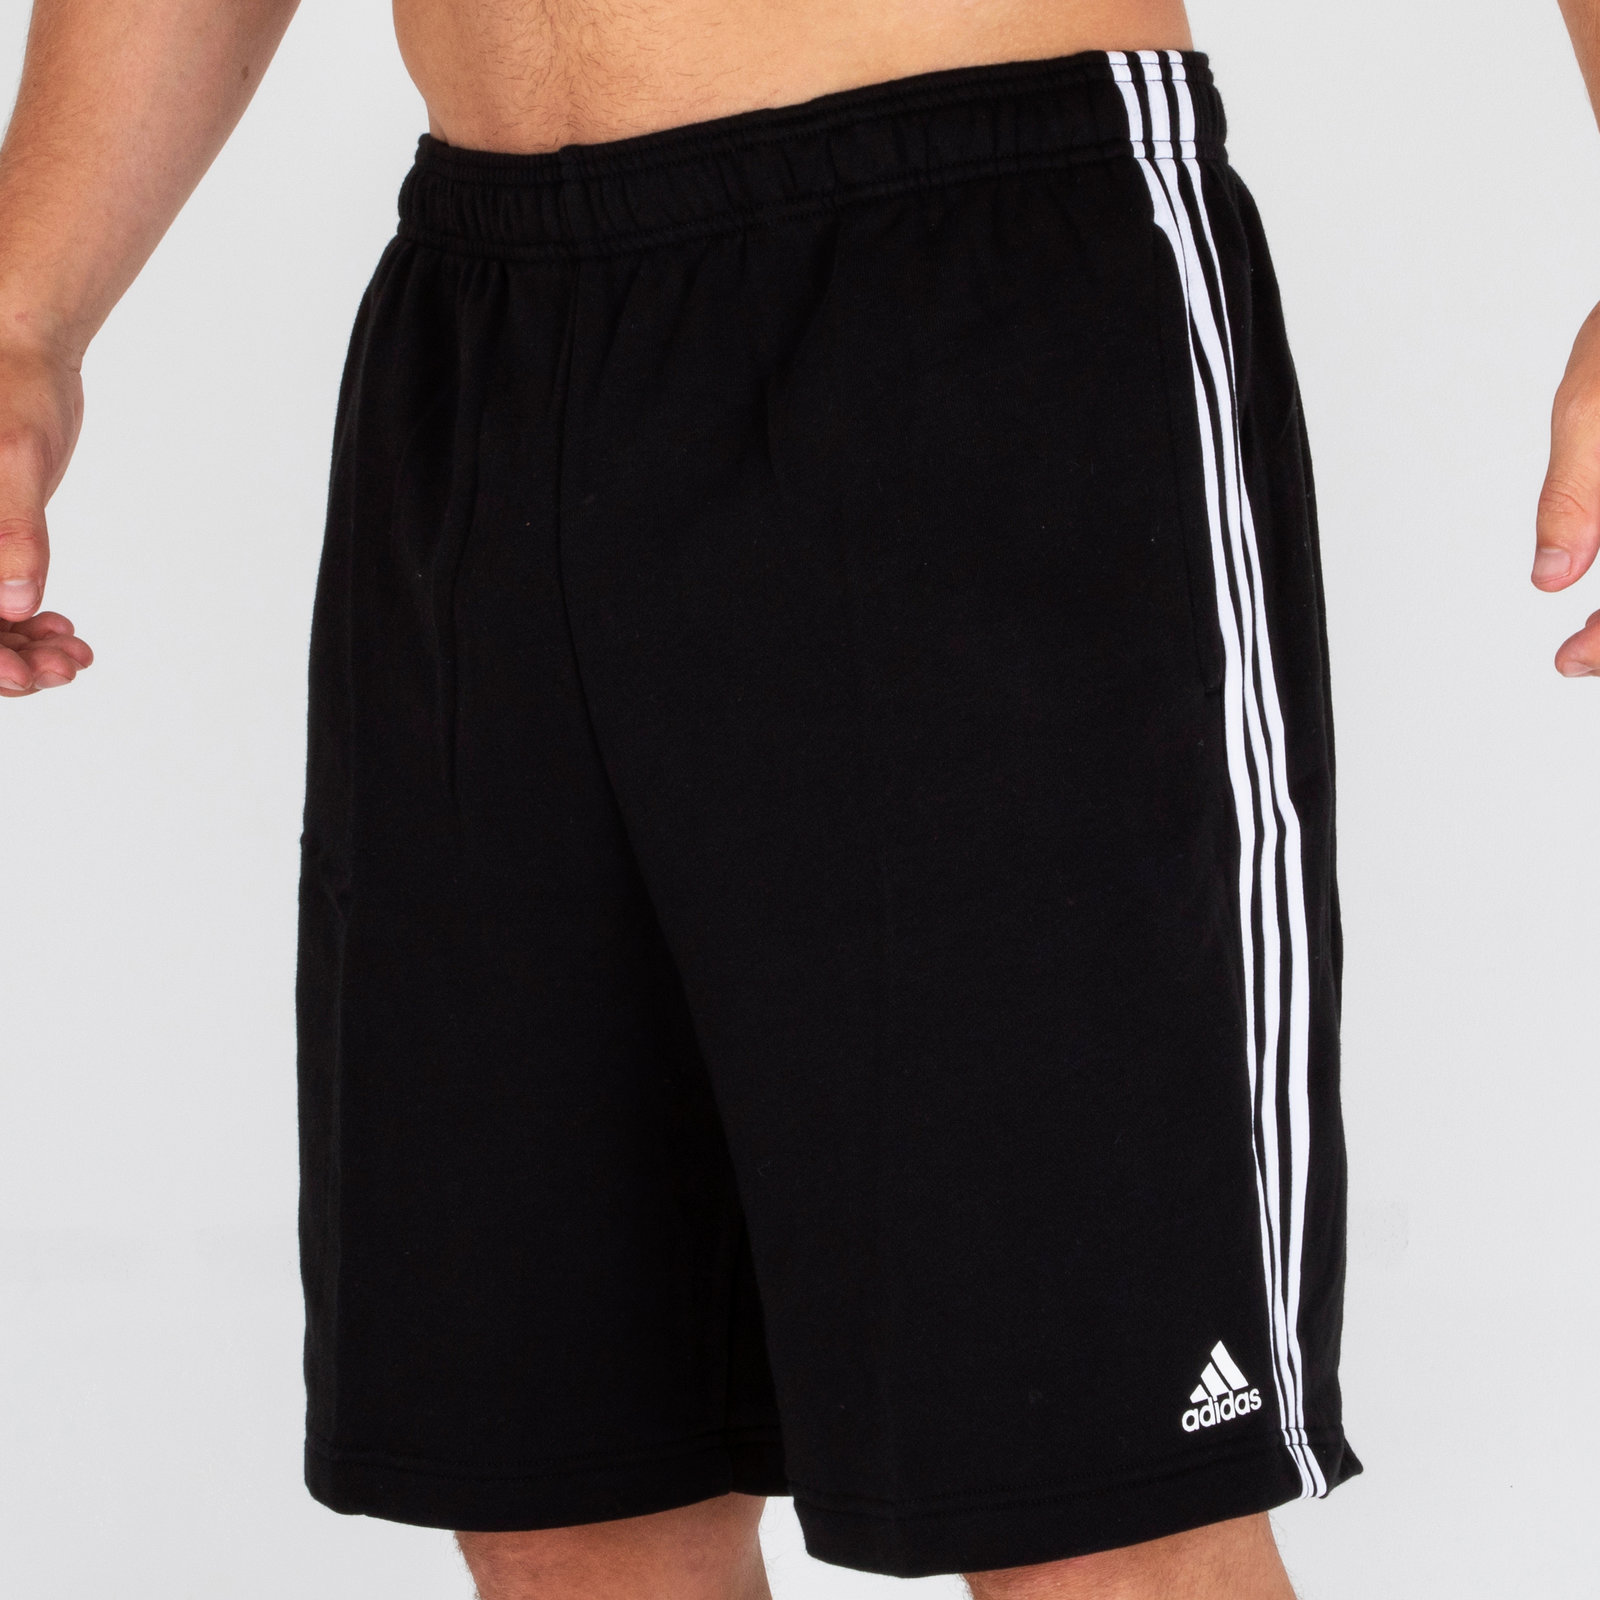 adidas 3 stripe shorts | Great Quality 